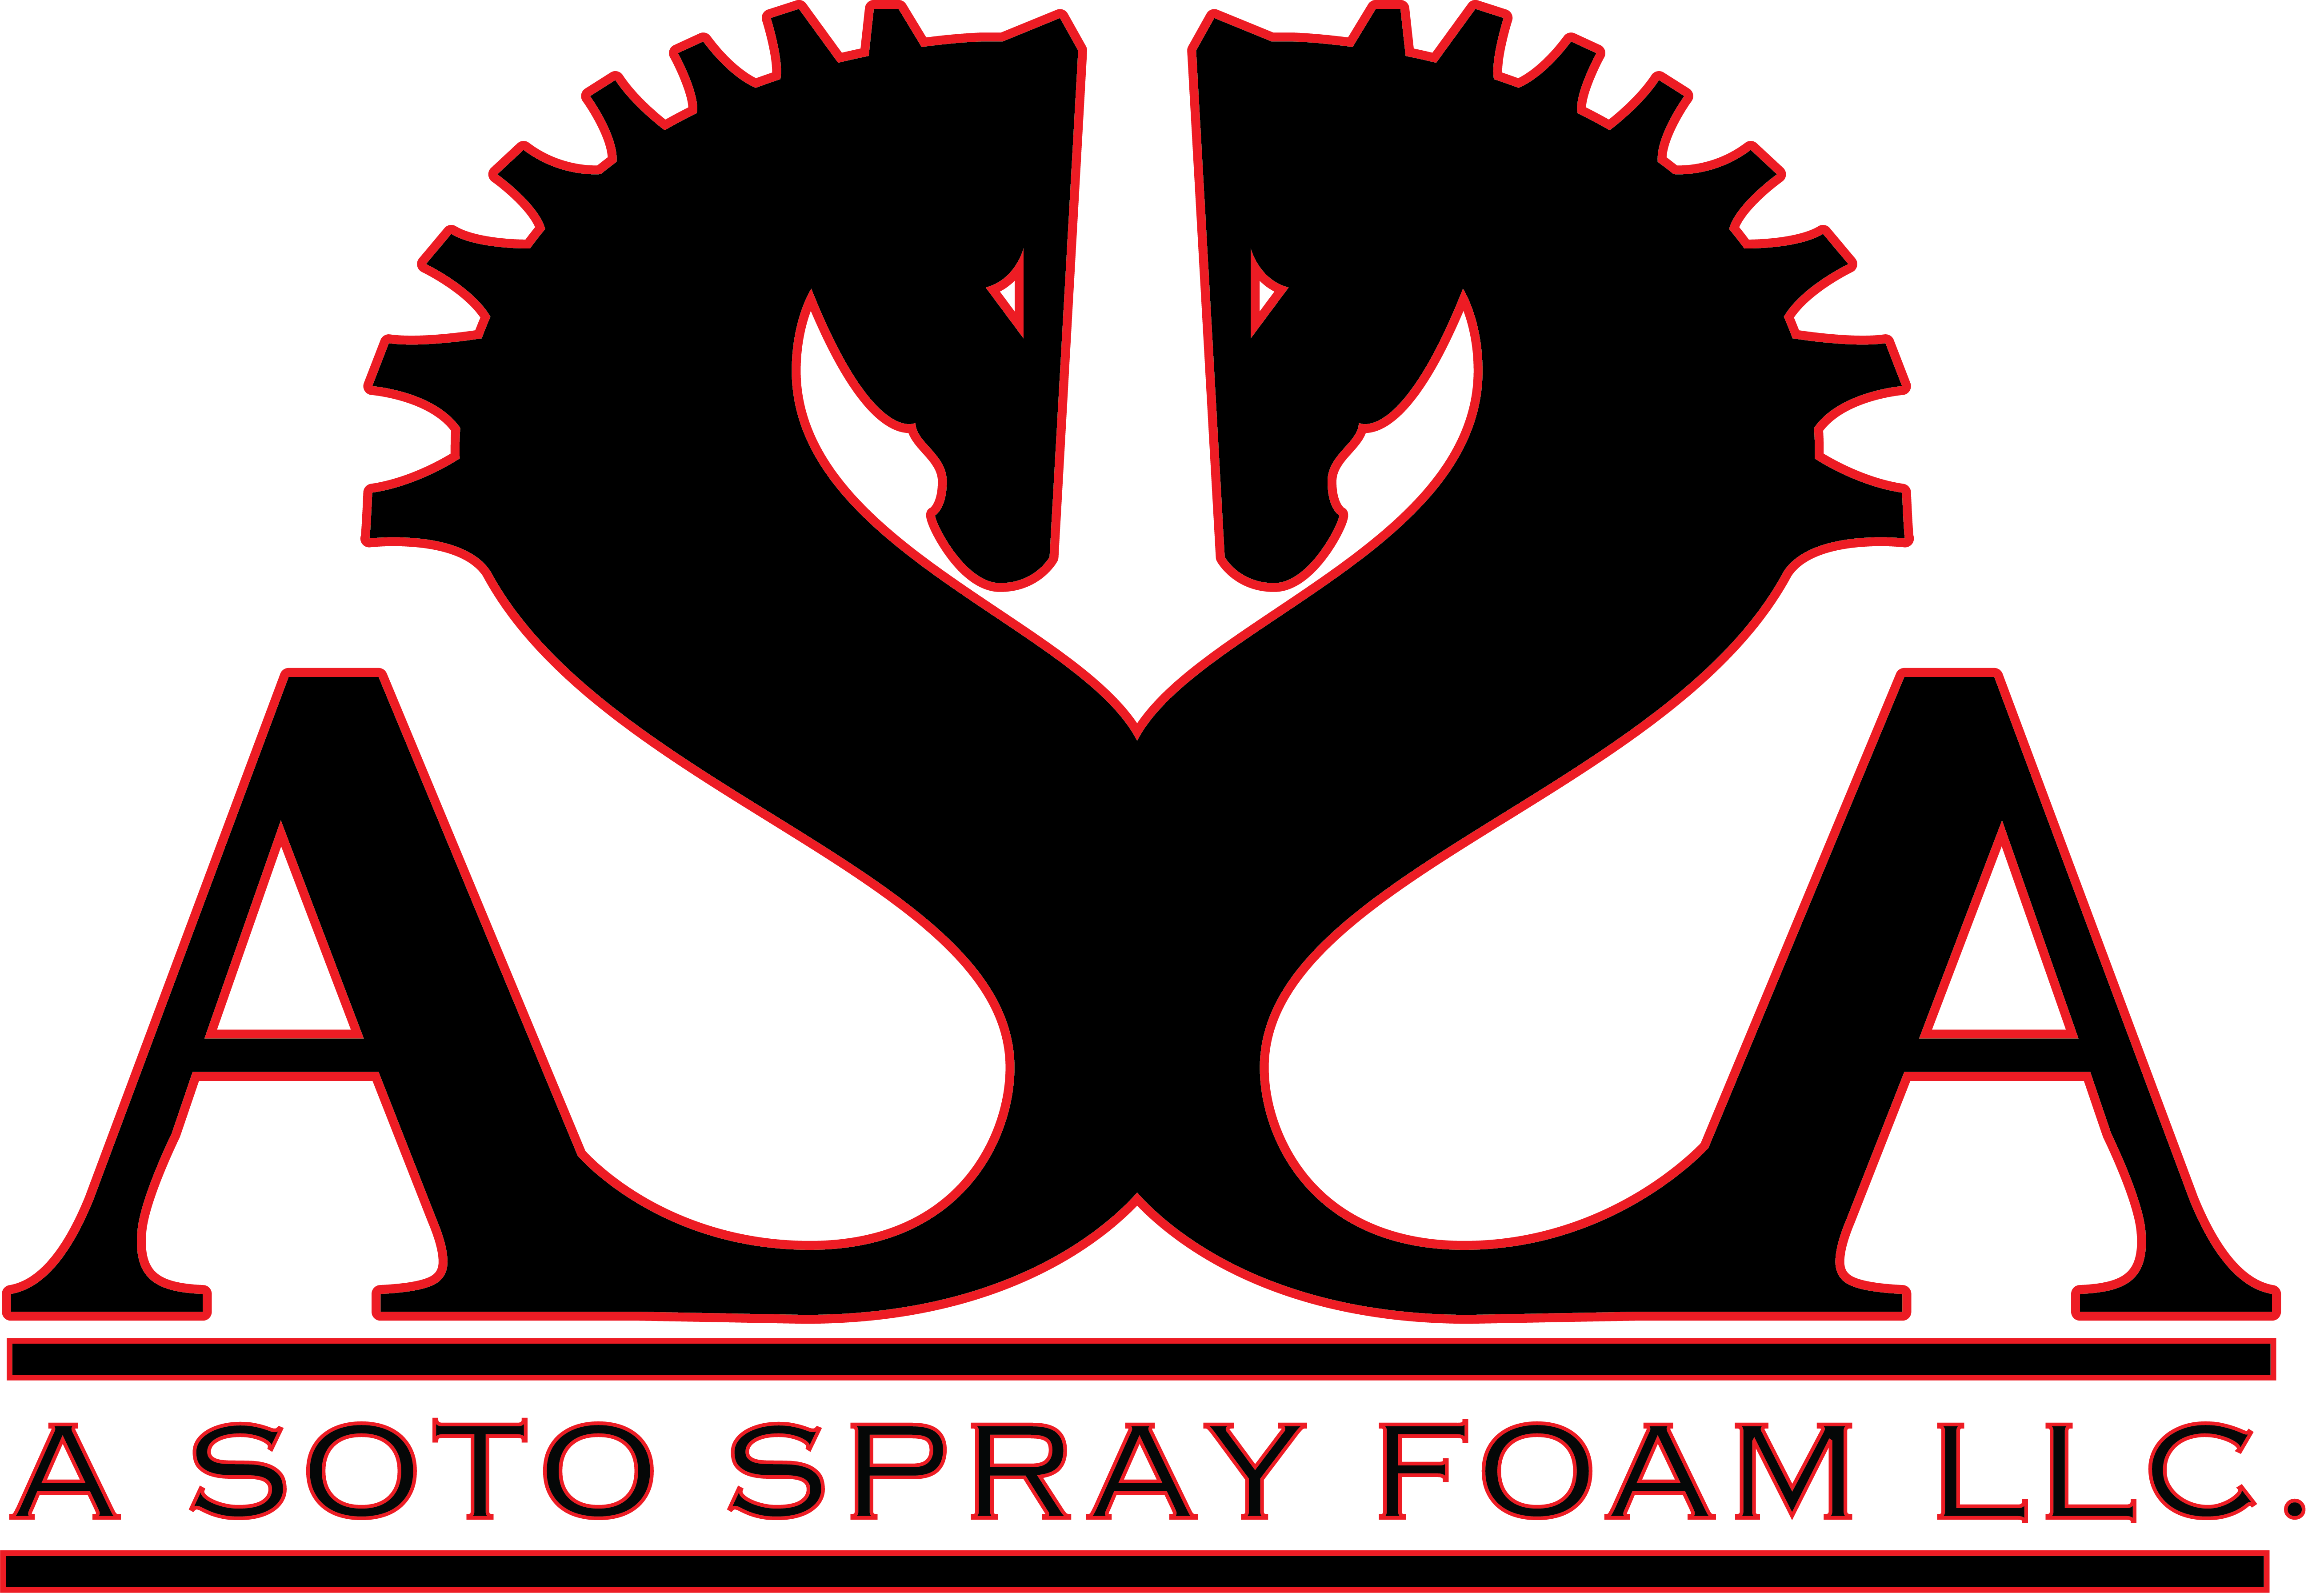 A Soto Spray Foam